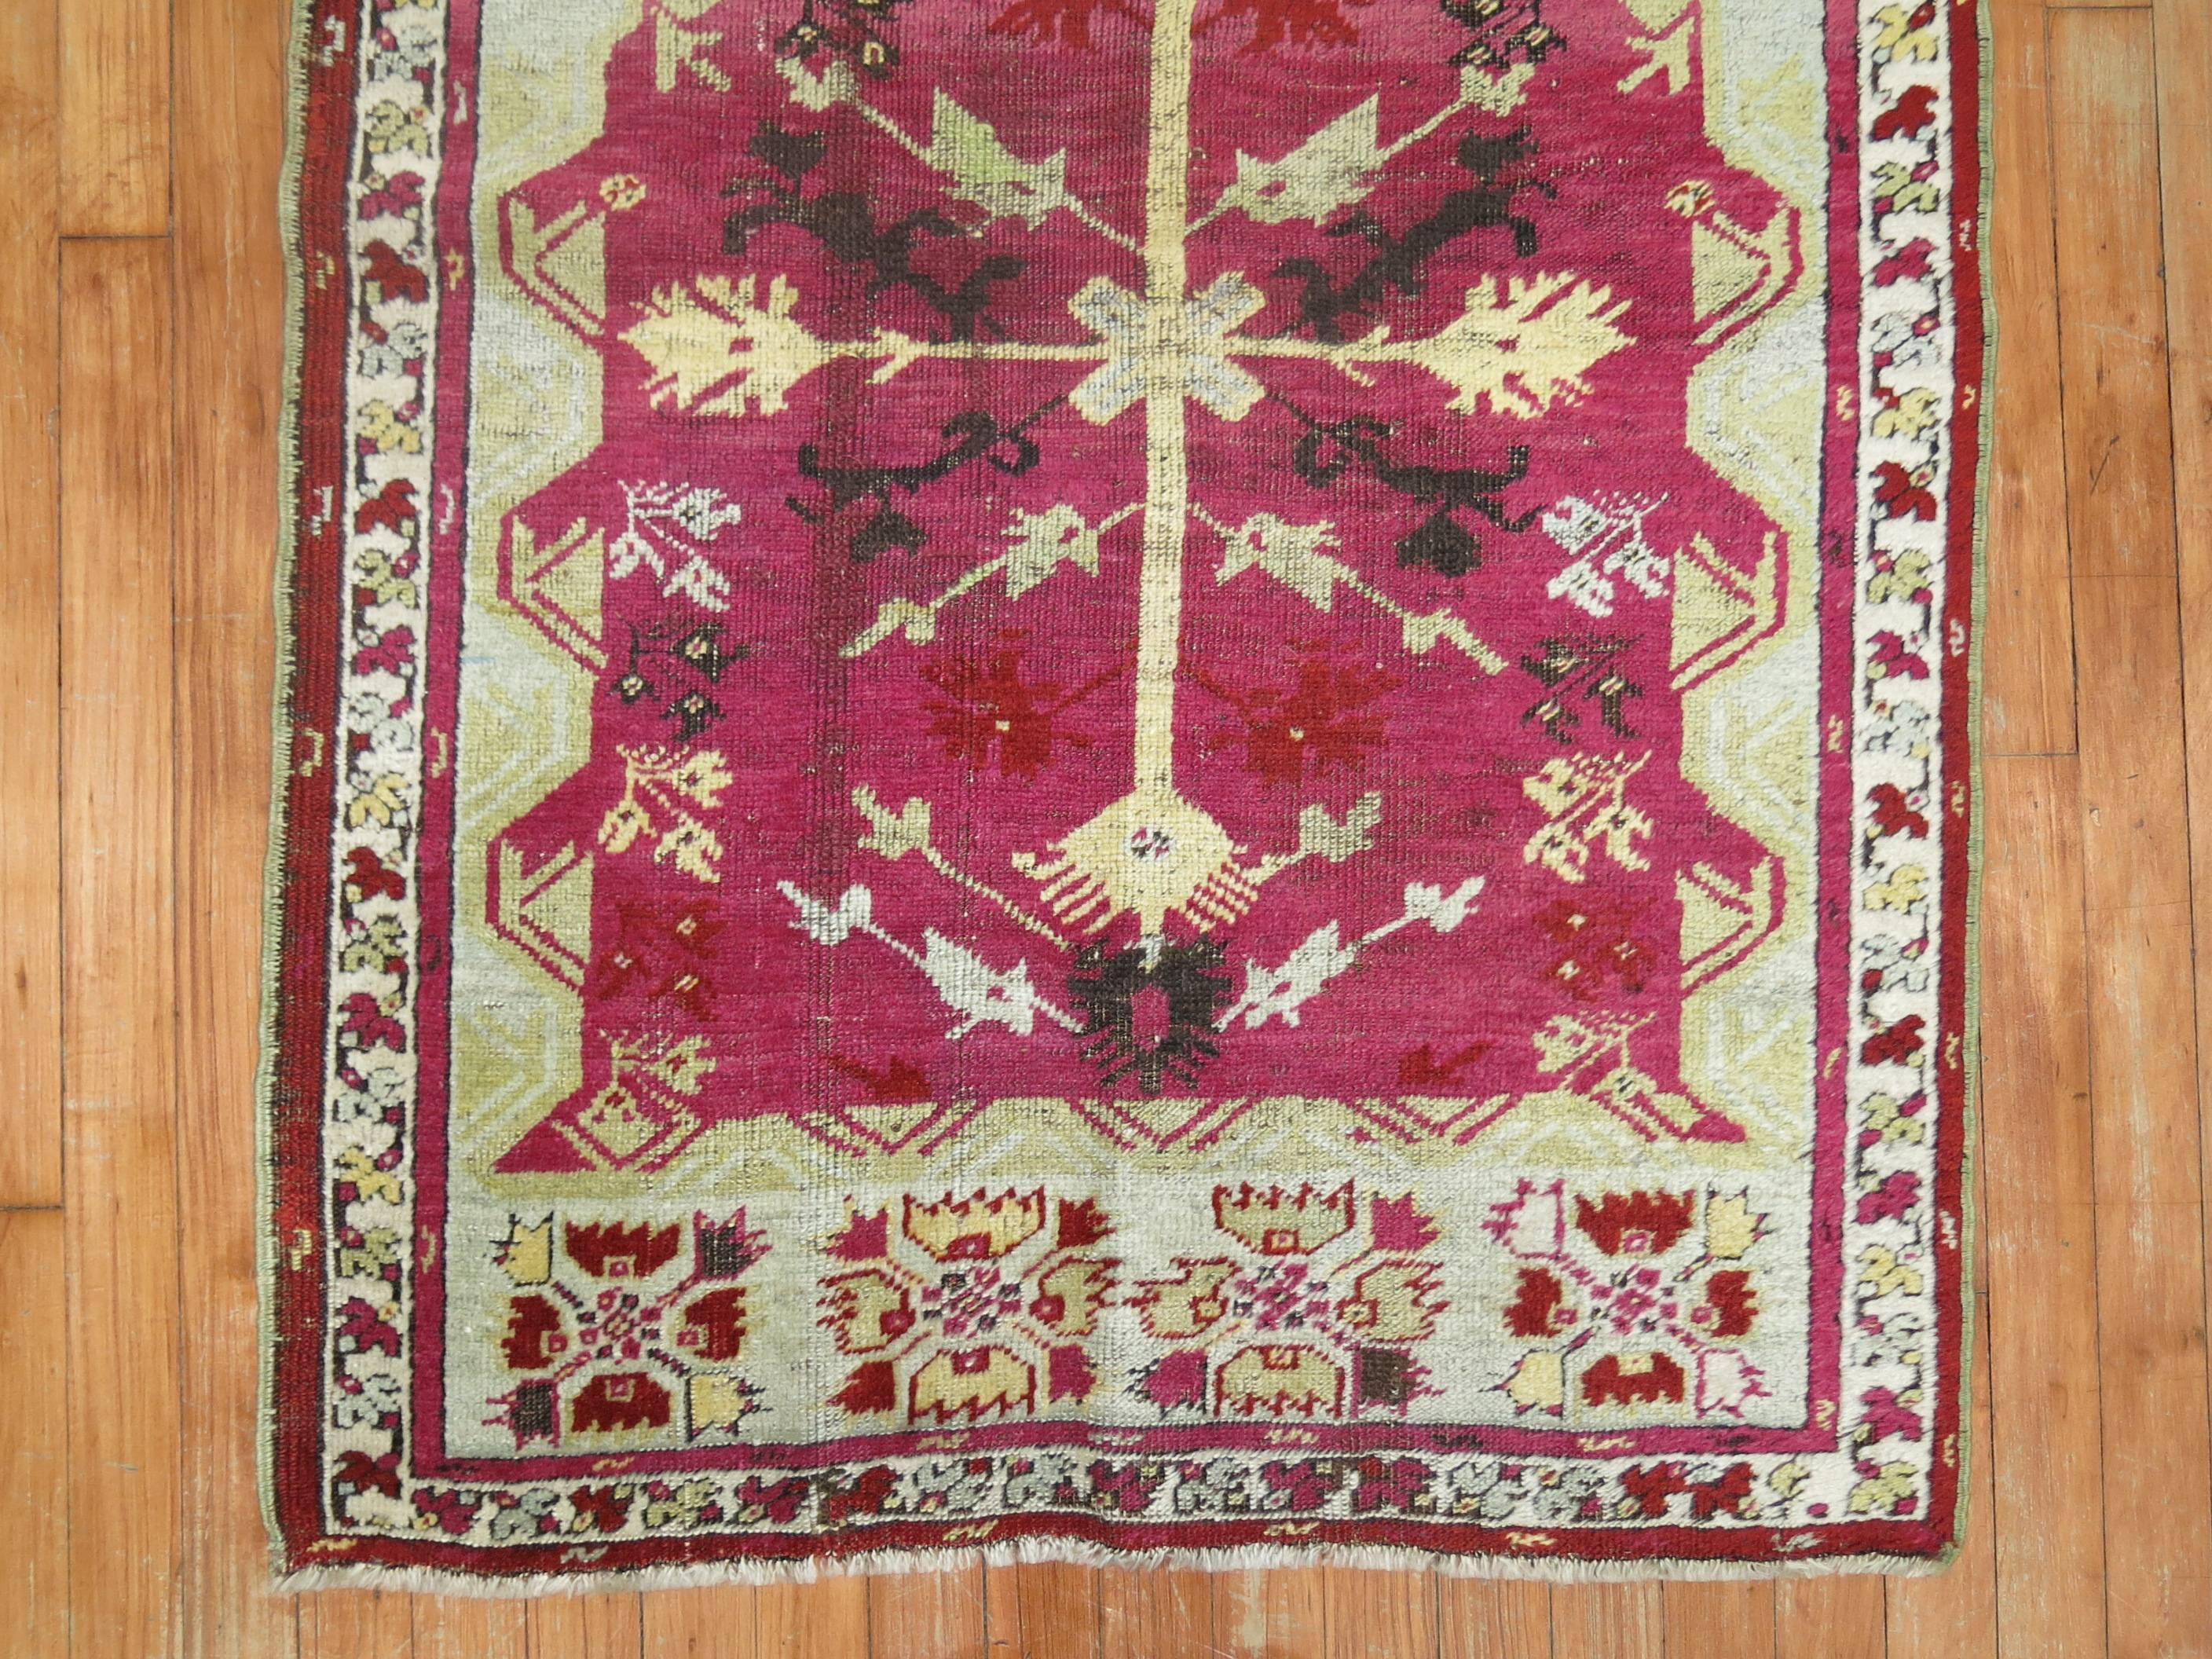 A one of a kind decorative Turkish Ghiordes rug with a prayer niche motif.